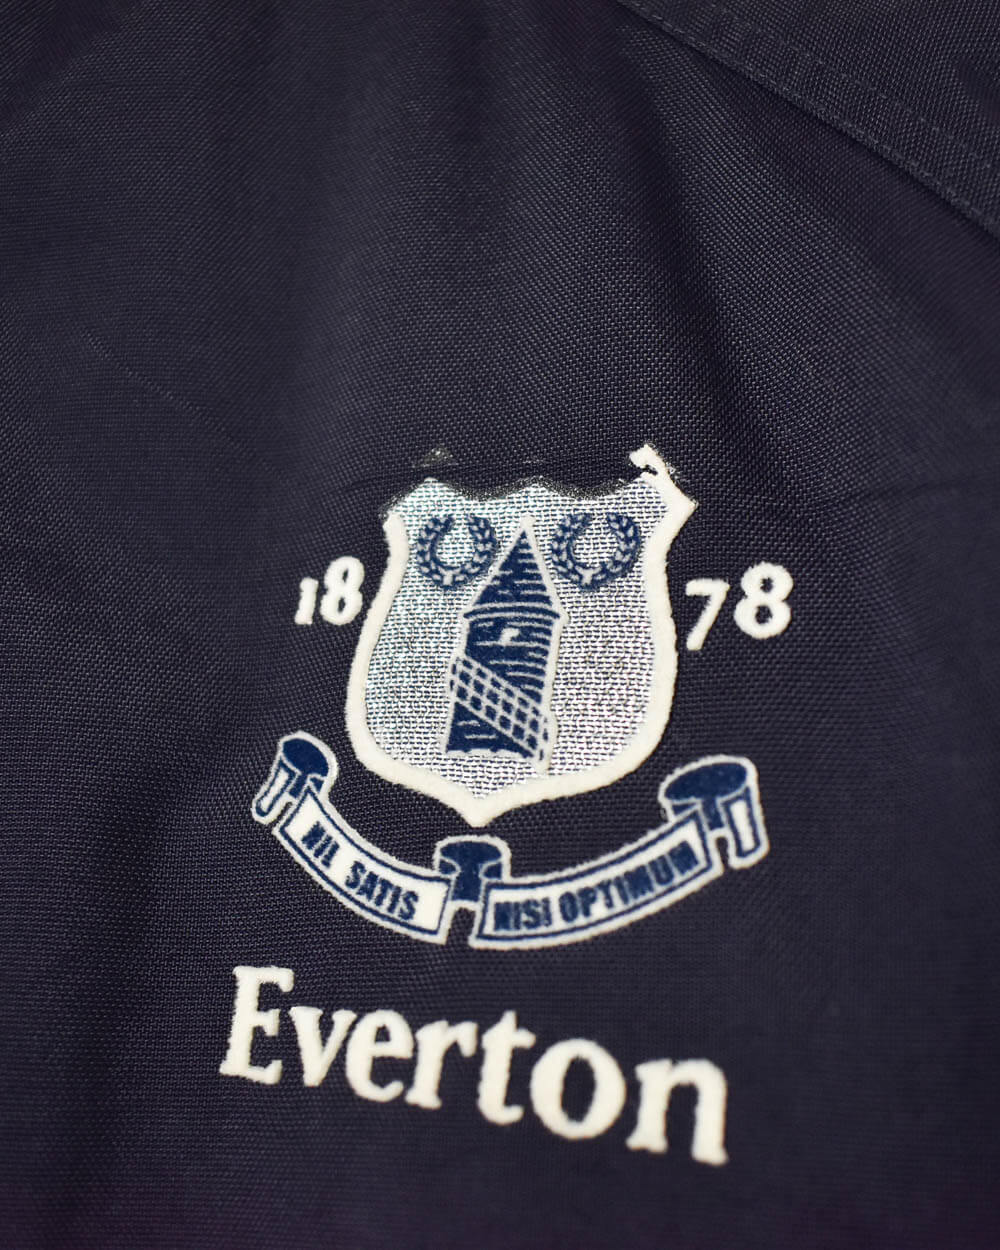 Navy Puma King 00s Everton FC Warmup Jacket - XX-Large